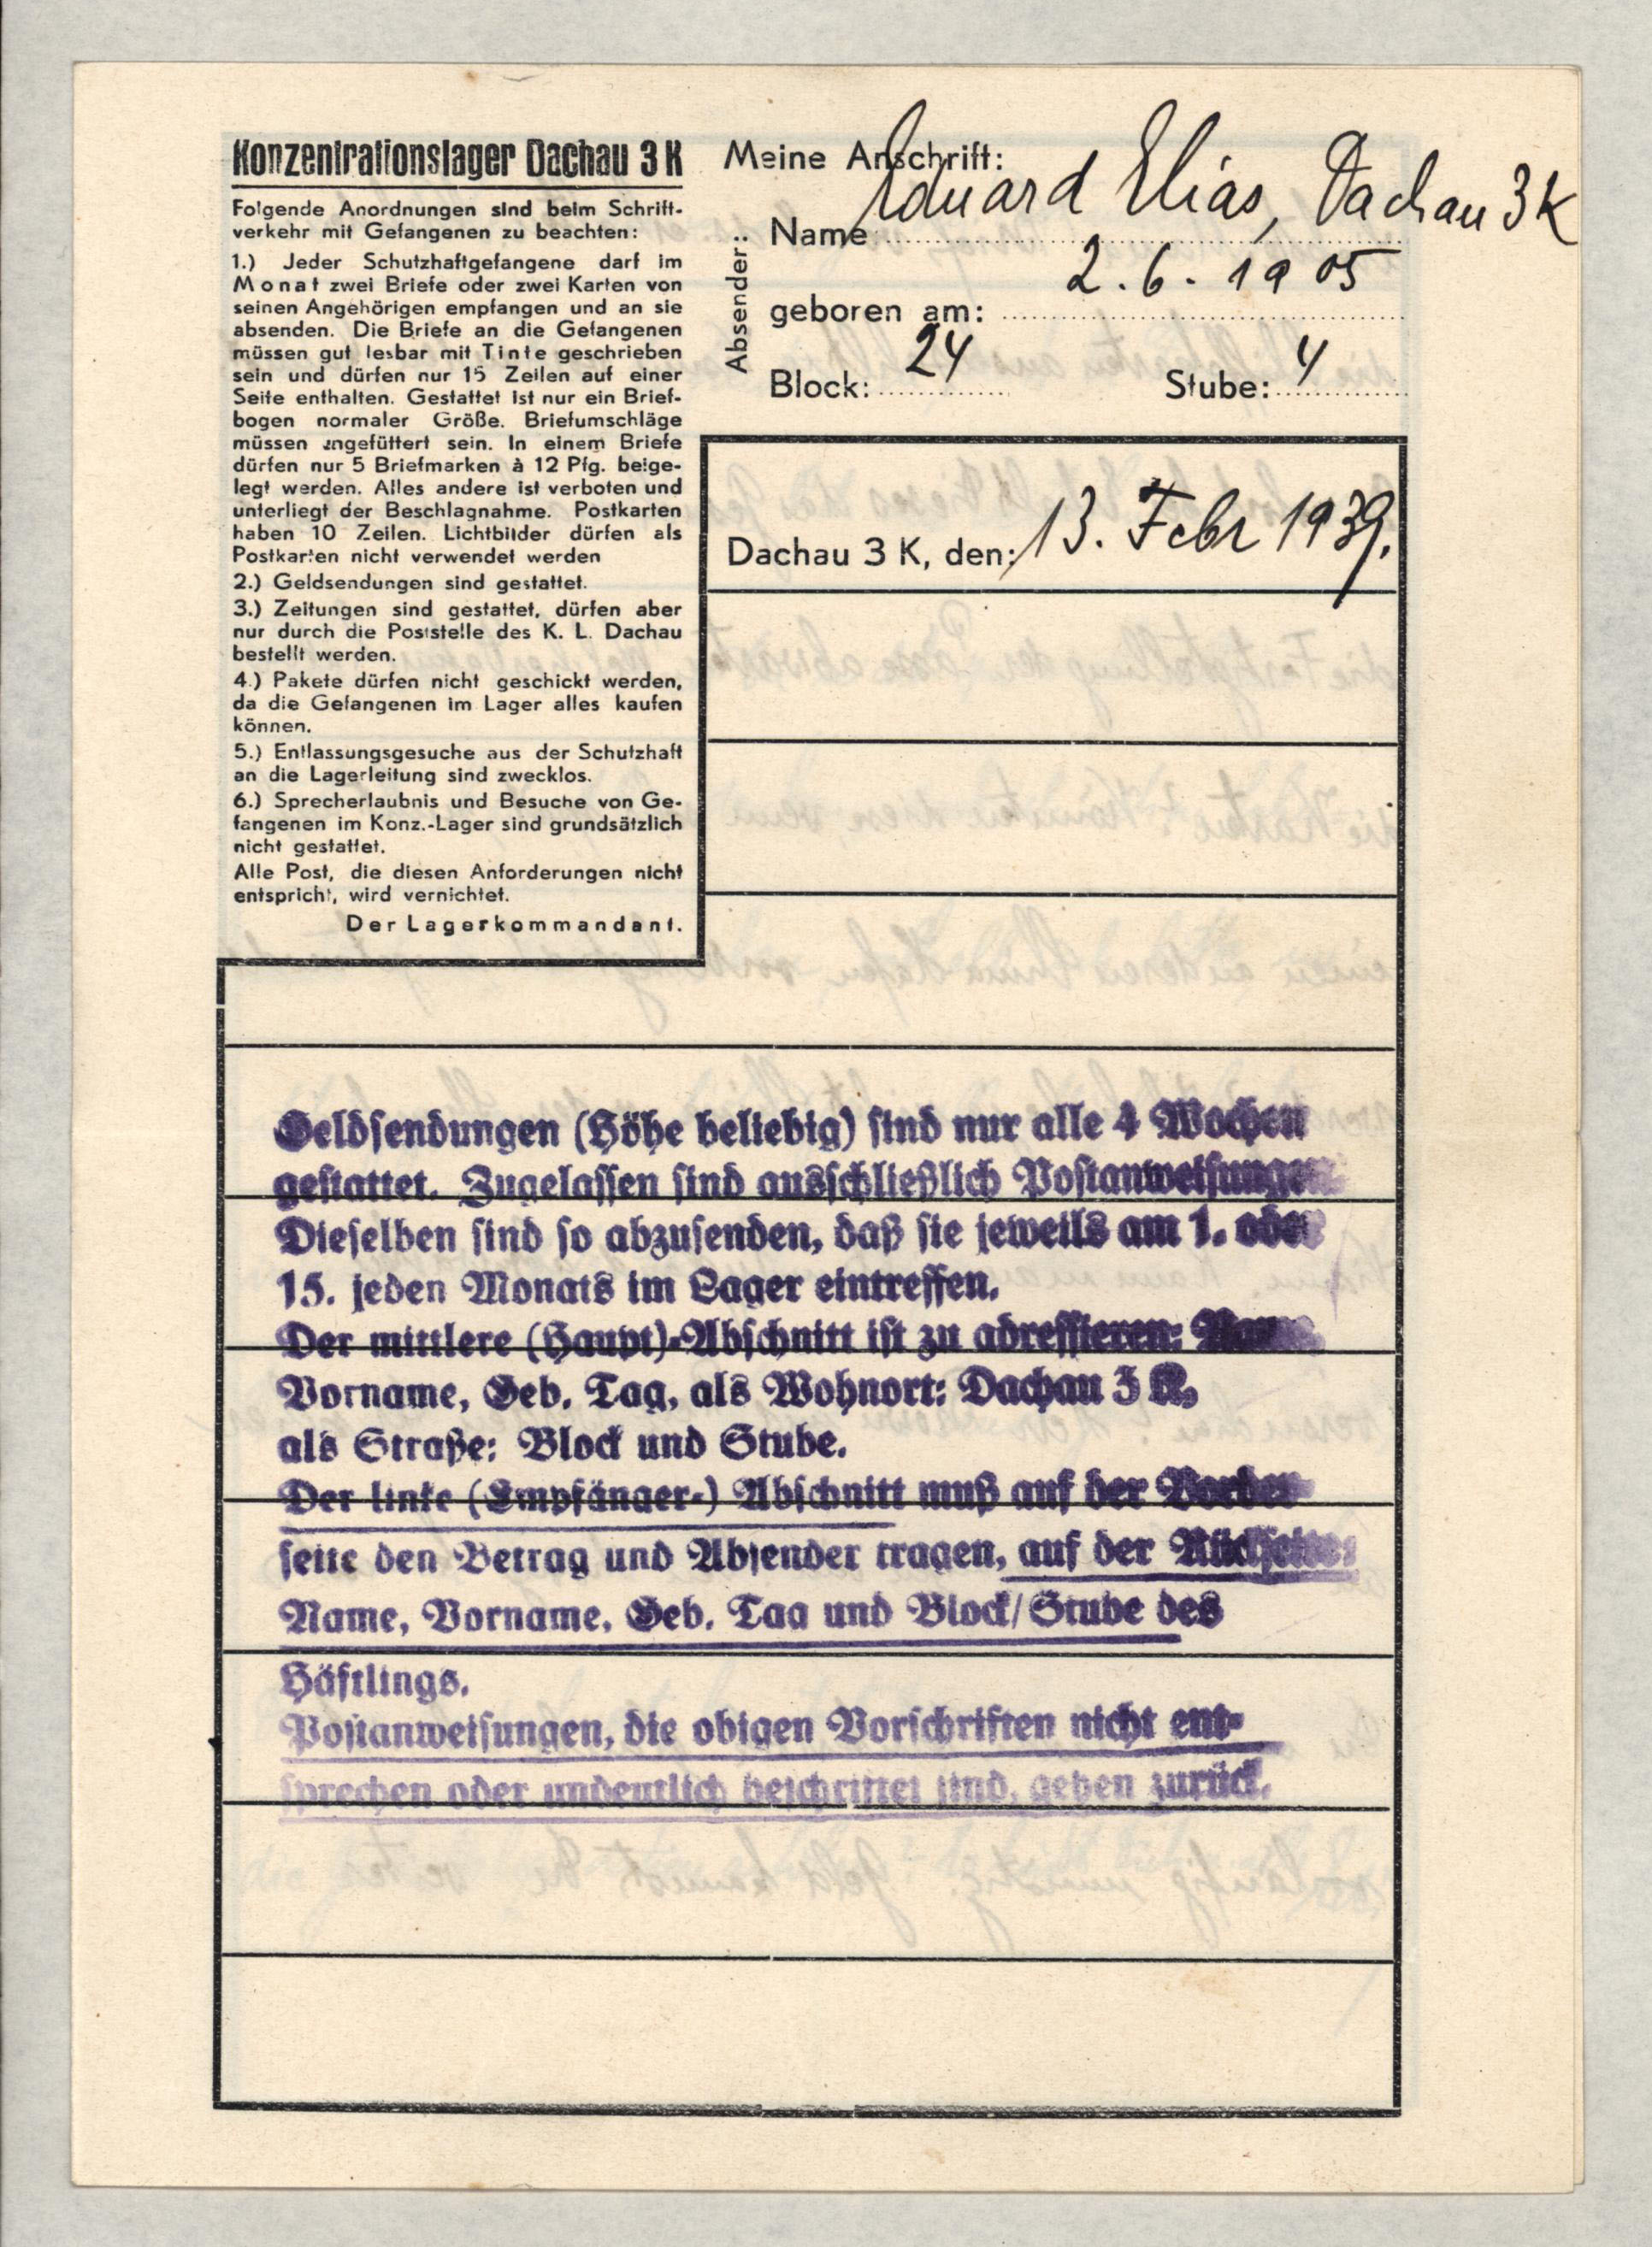 Eduard Elias, Dachau cover, Letter, 13 February 1939